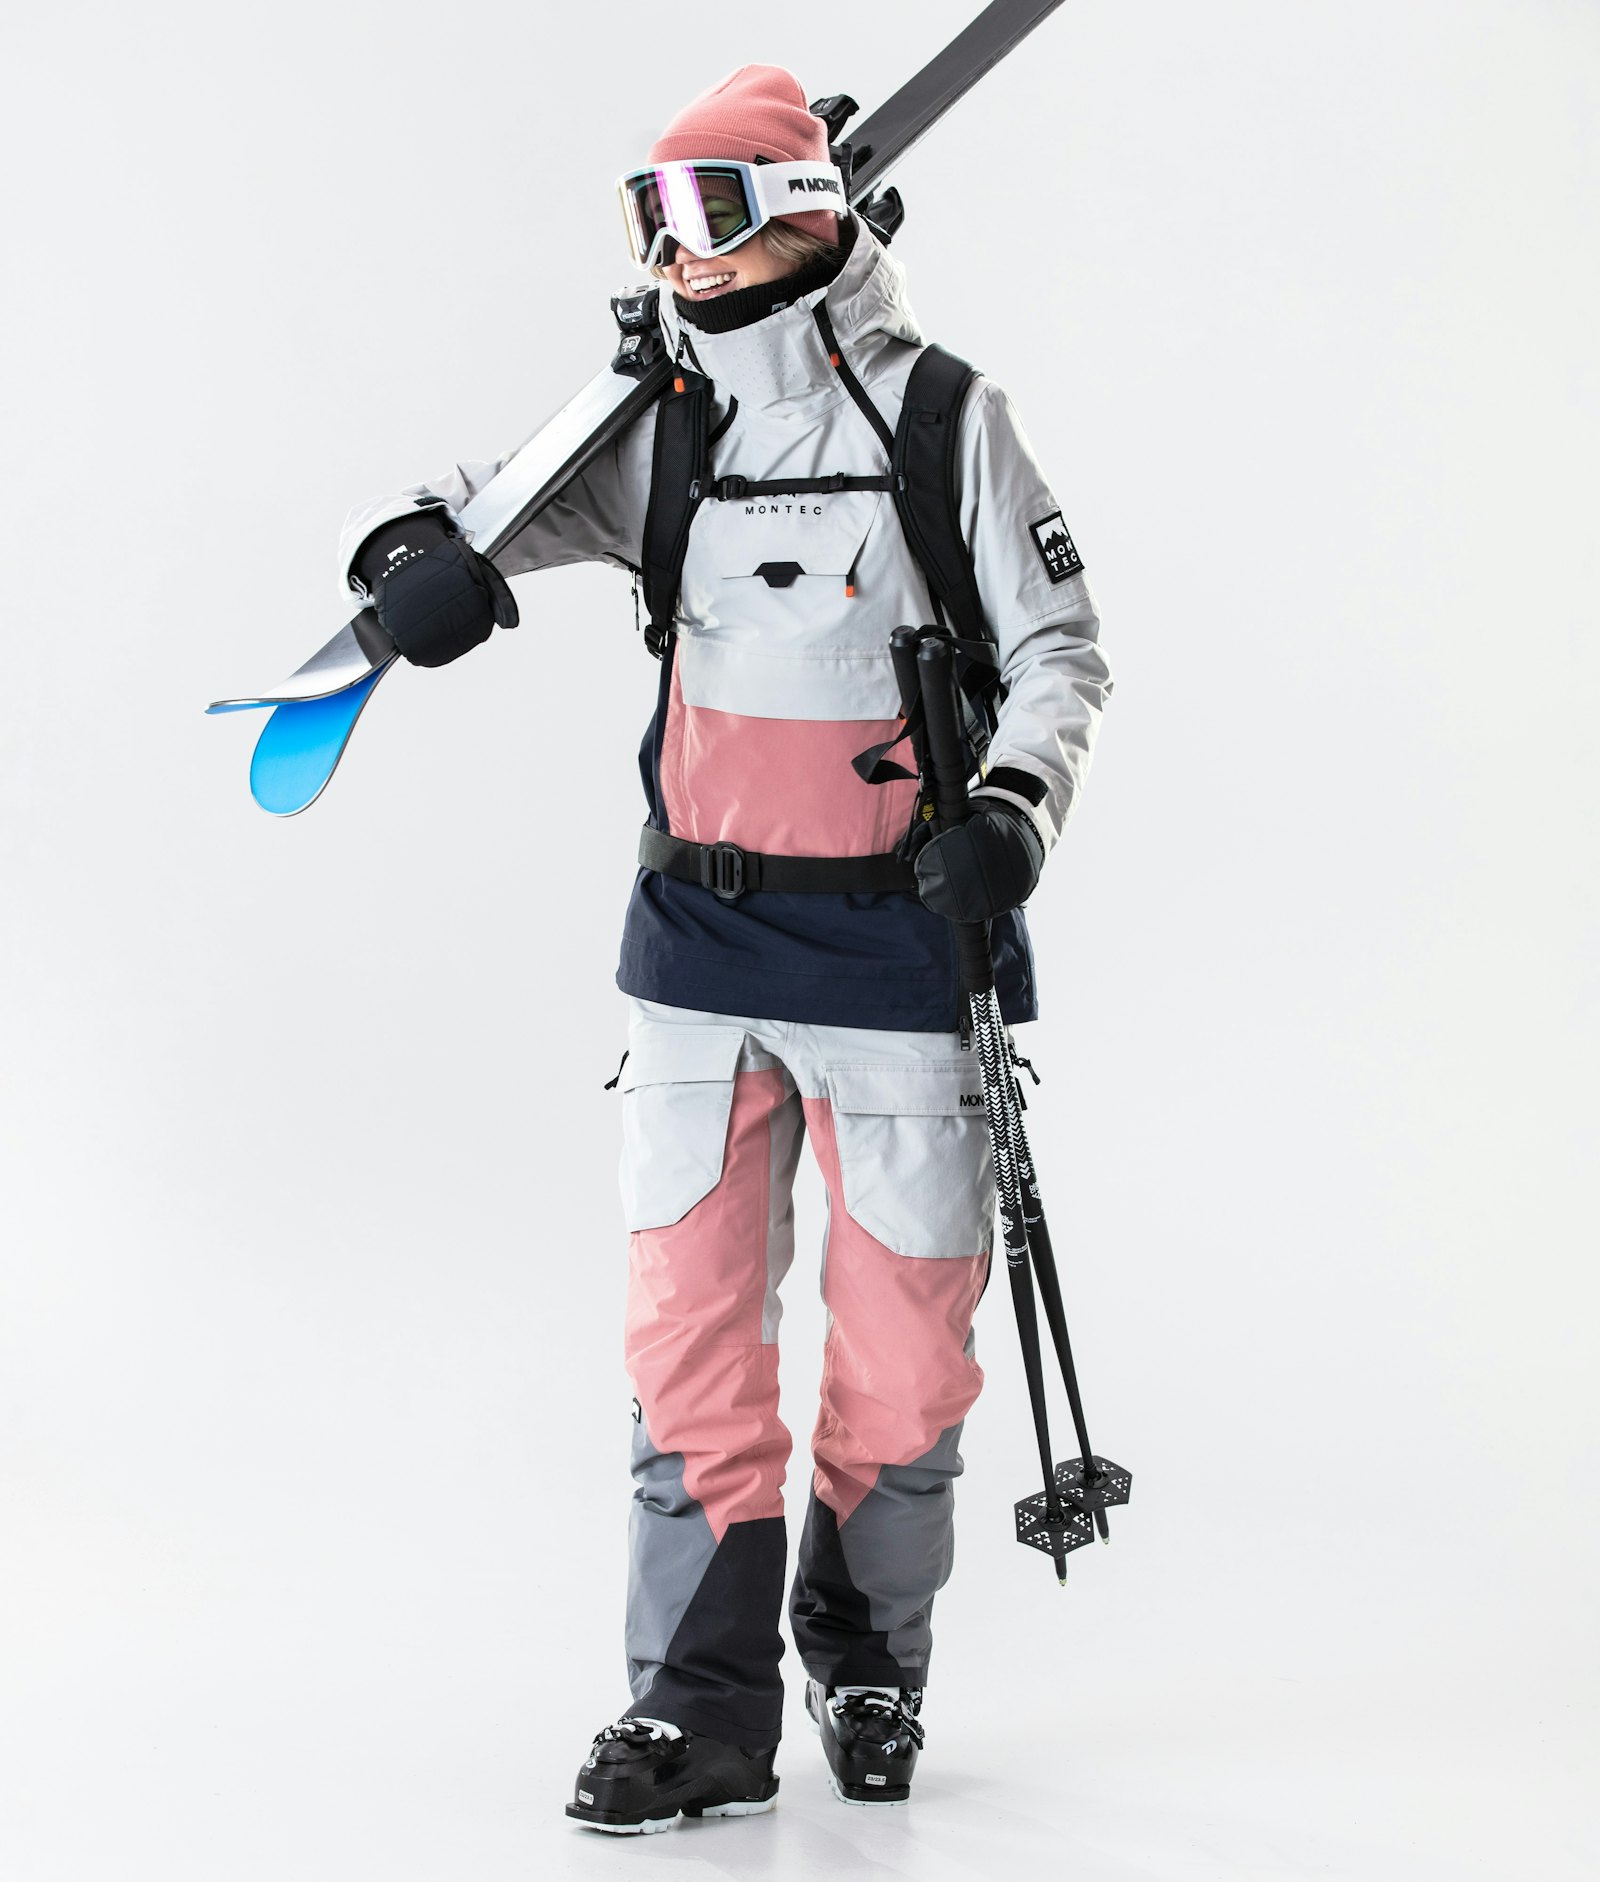 Montec Doom W 2020 Ski jas Dames Light Grey/Pink/Marine